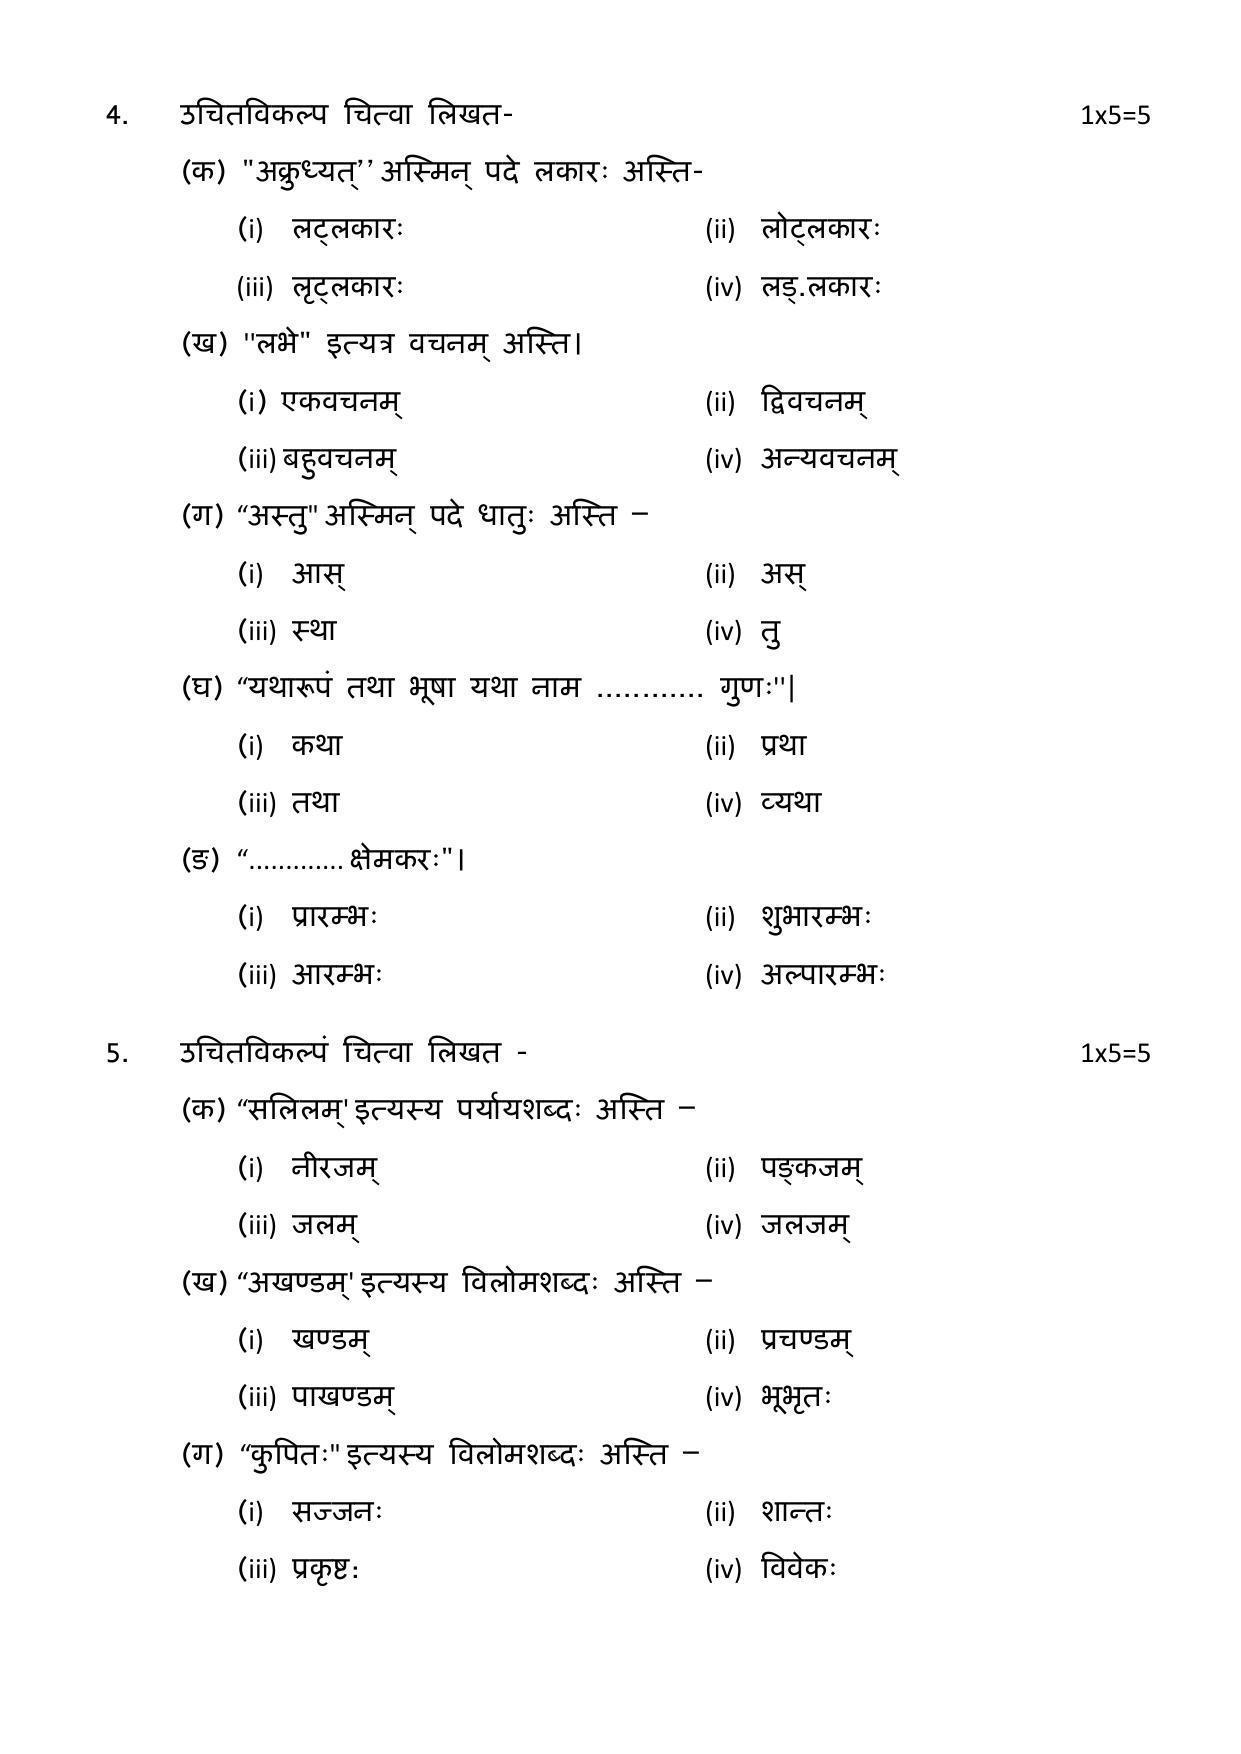 MP Board Class 12 Sanskrit 2019 Question Paper - Page 3